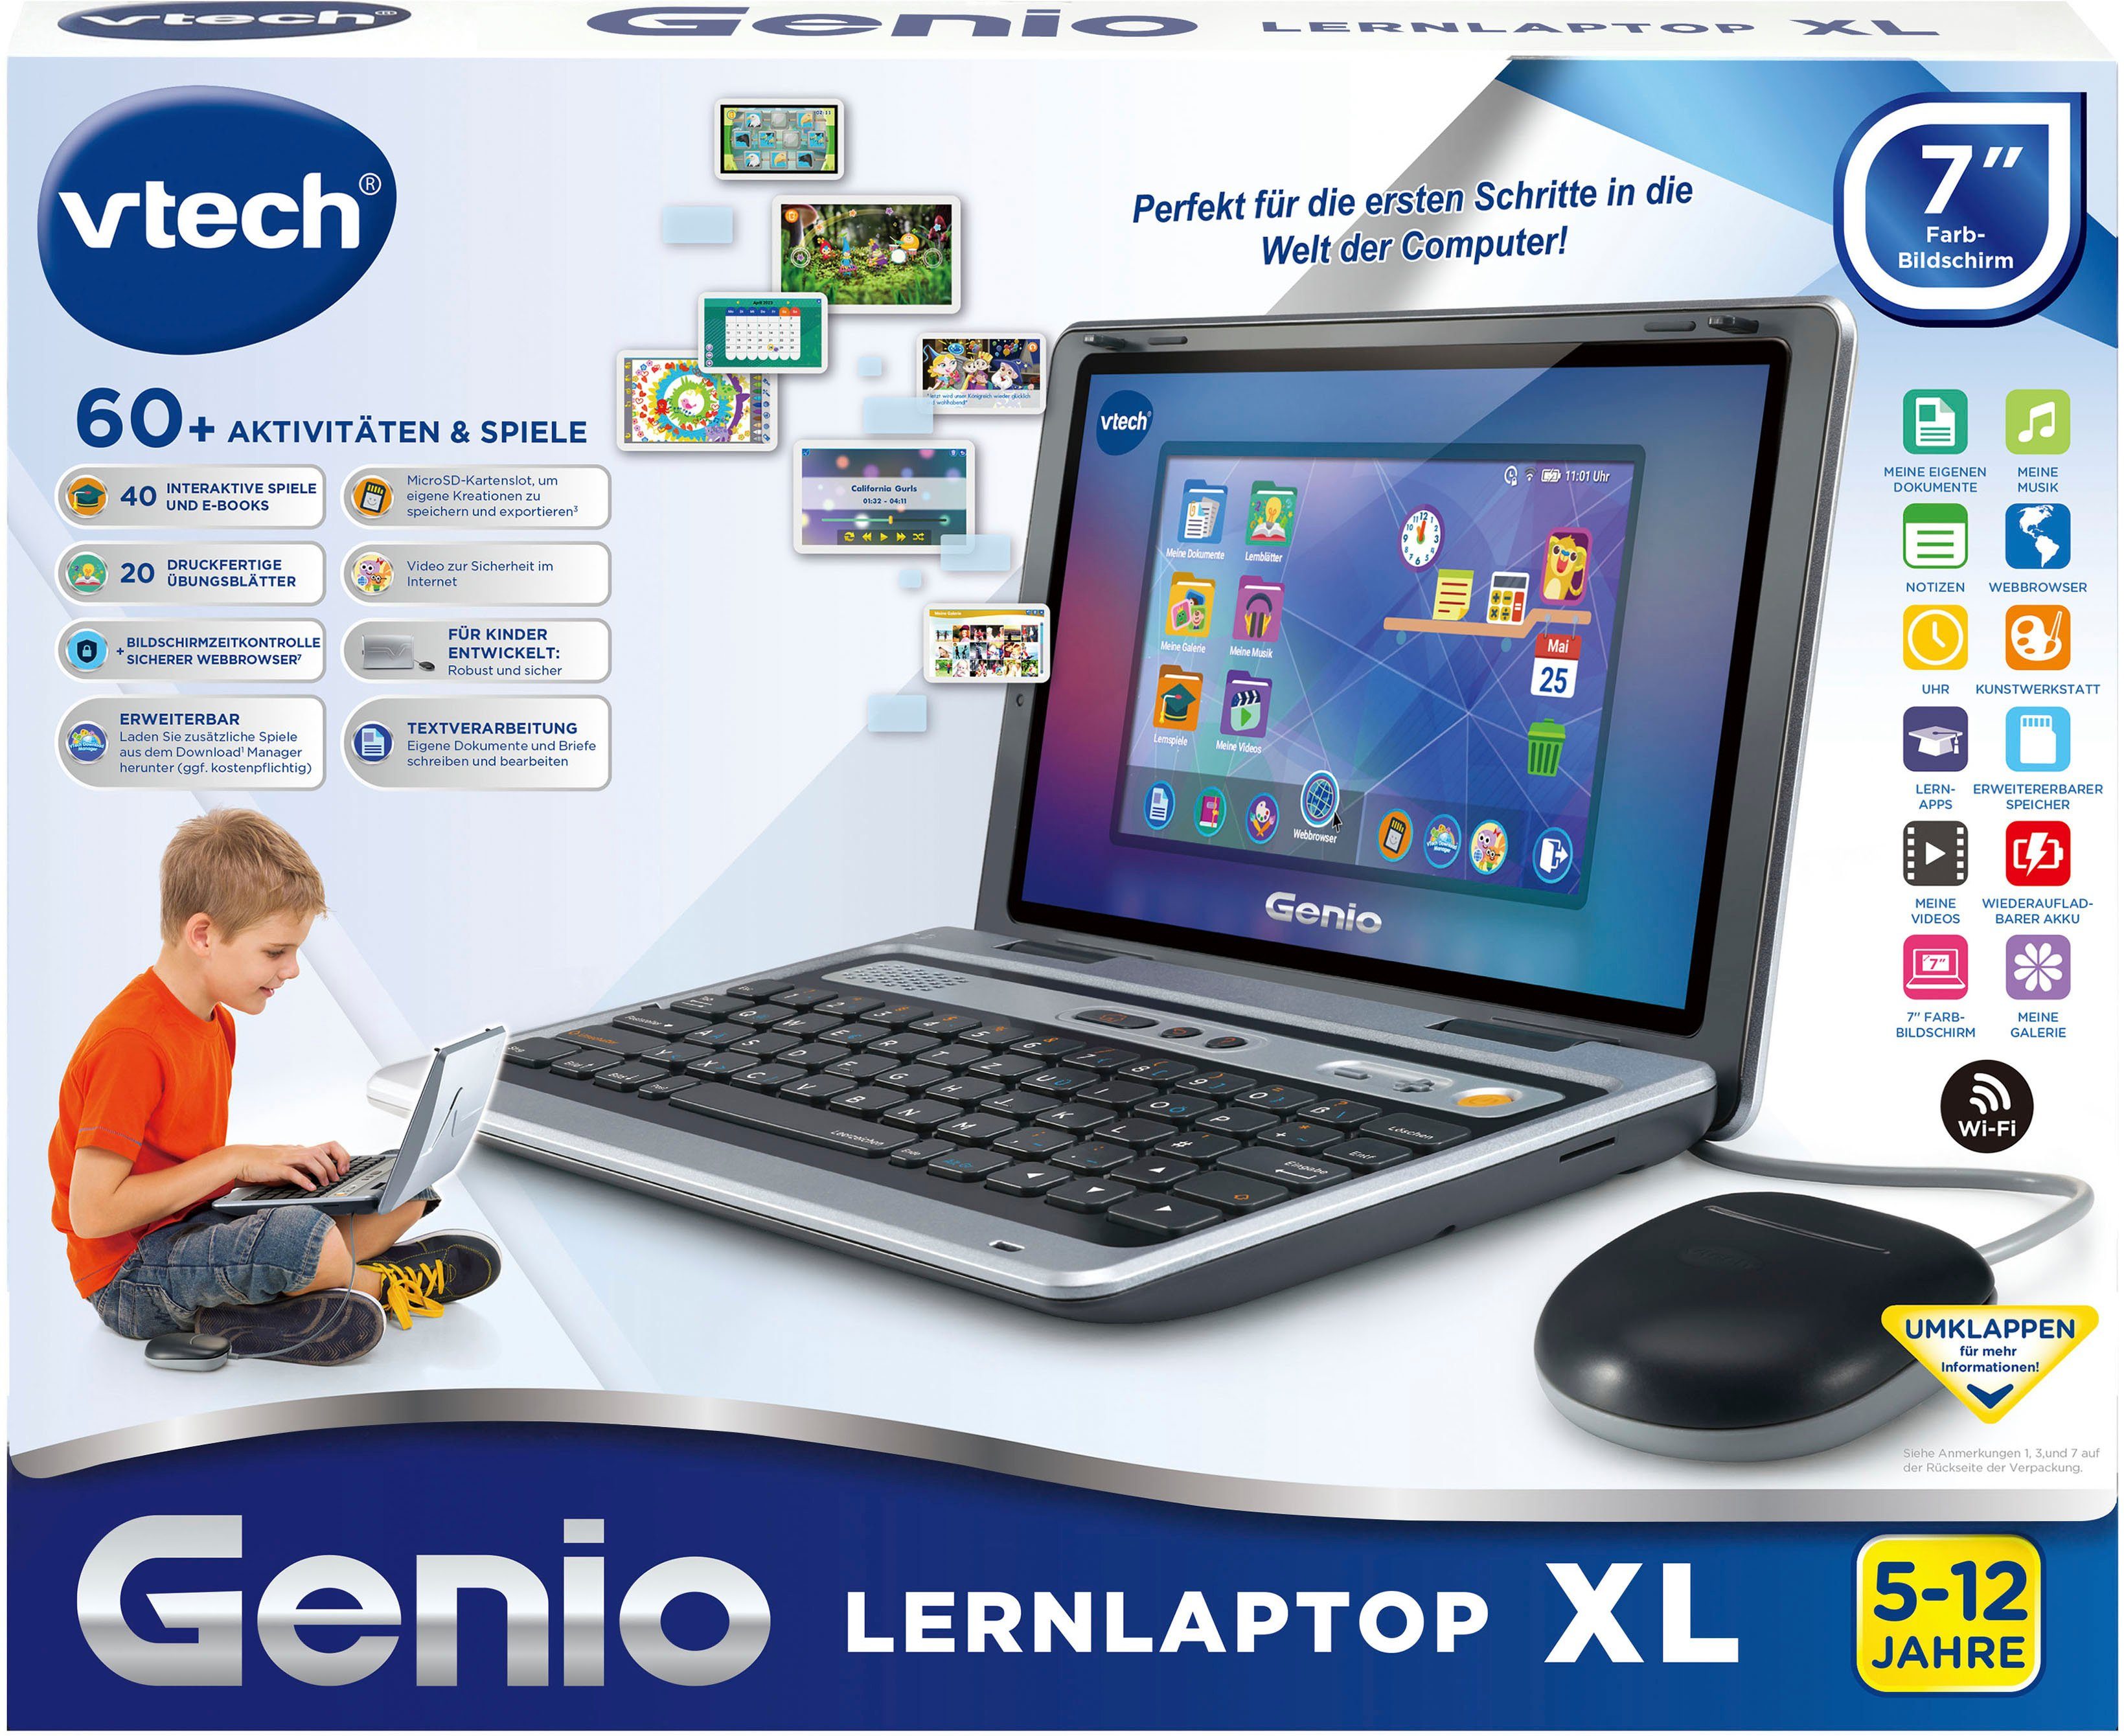 Kindercomputer School & silber Vtech® Go, XL Lernlaptop Genio